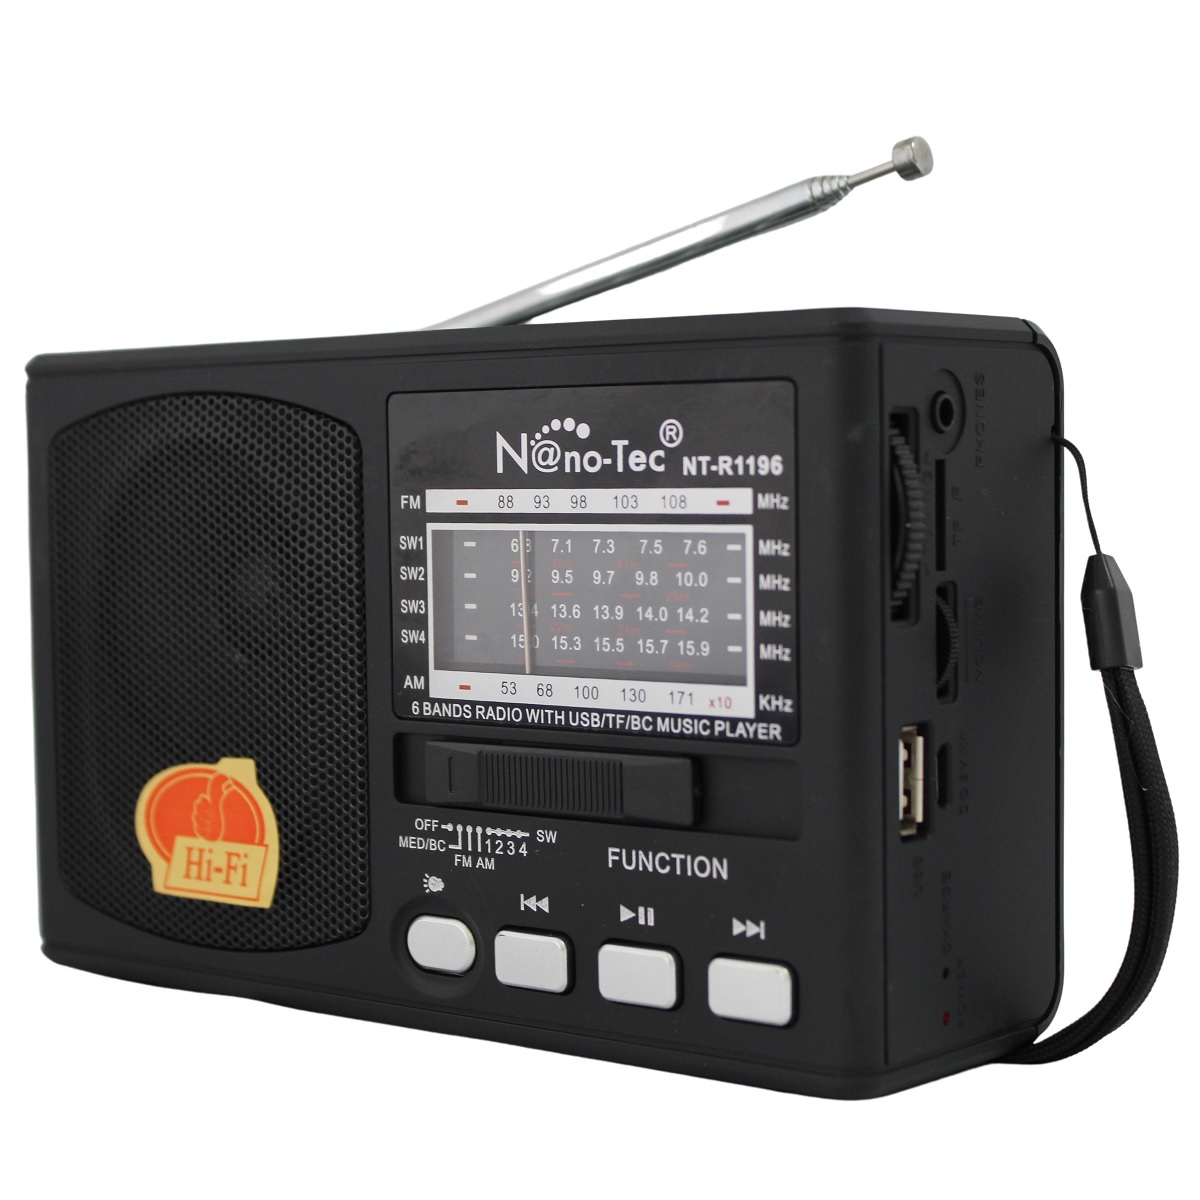 Radio Portatil Am Fm Mp3 Bateria Recargable Para Escuchar Musica Futbol